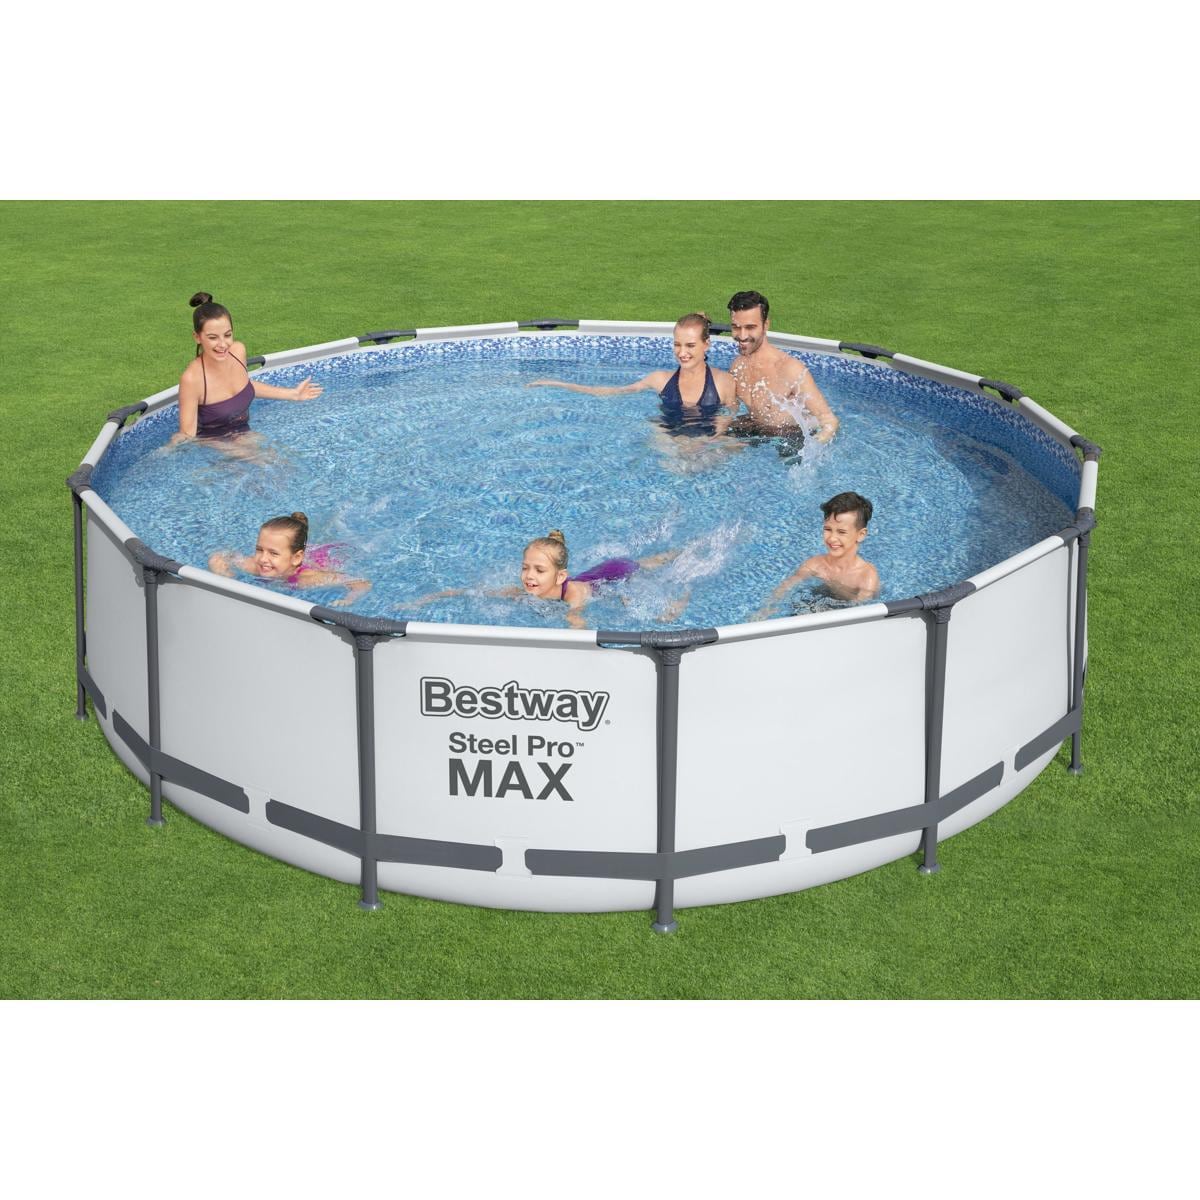 Bestway Steel Pro Max Pool Komplett-Set, rund, inkl. Filterpumpe, lichtgrau  bei Camping Wagner Campingzubehör